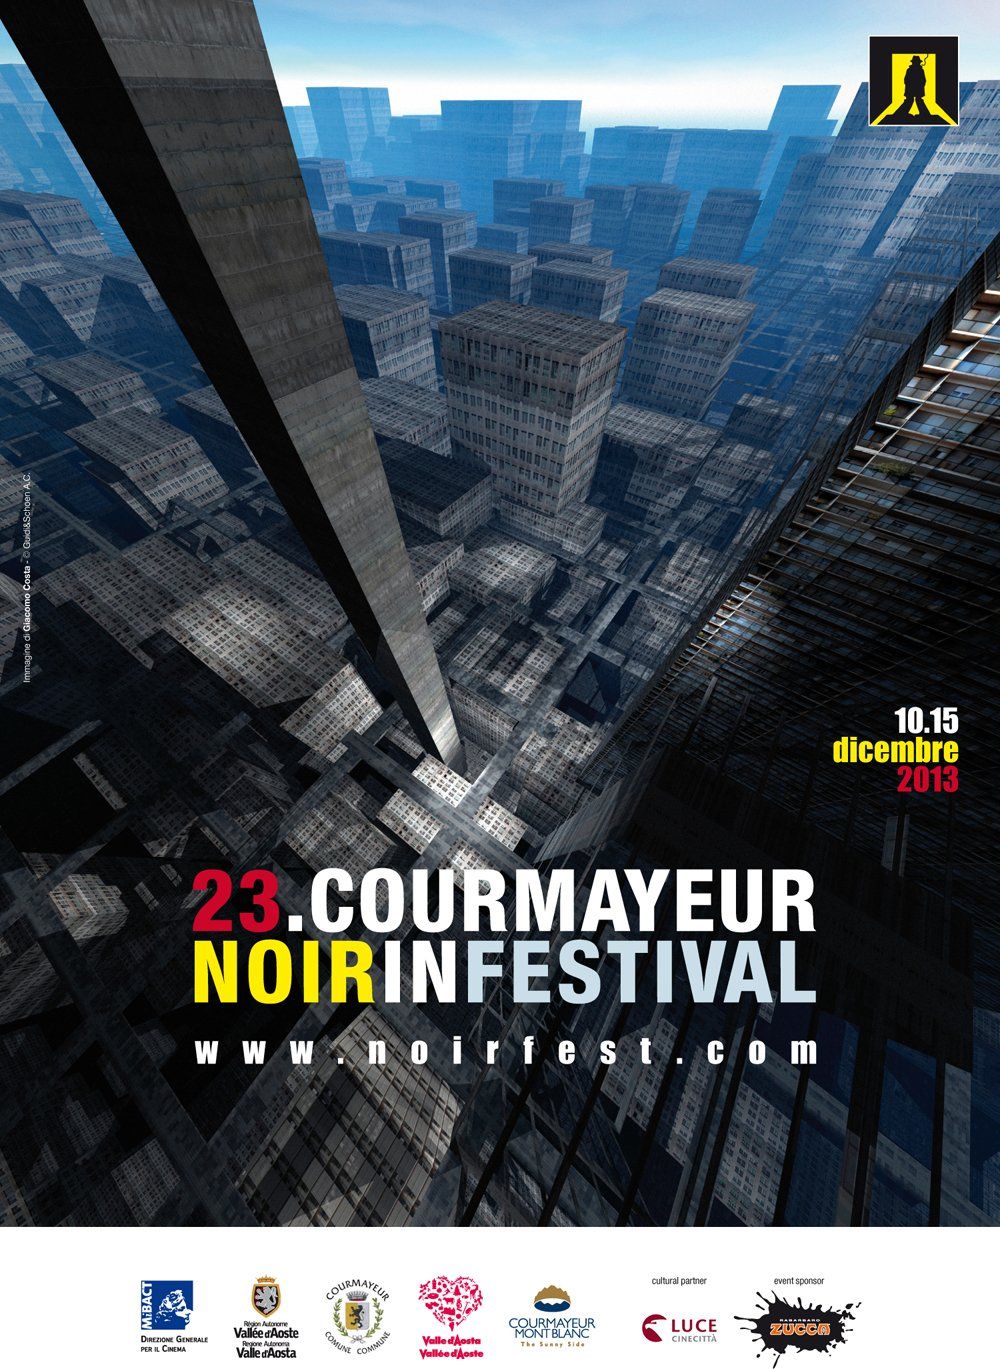 Courmayeur Noir in Festival: si riparte!!